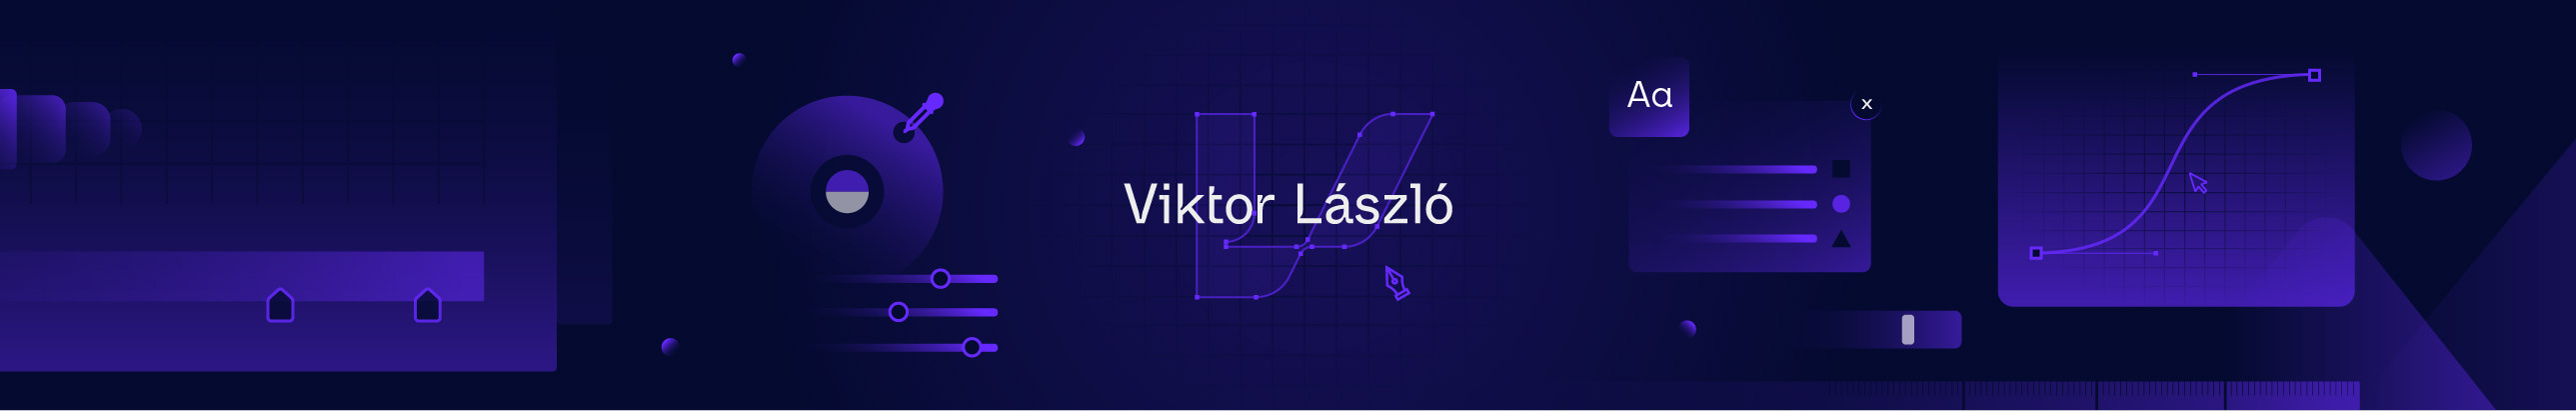 Viktor László's profile banner